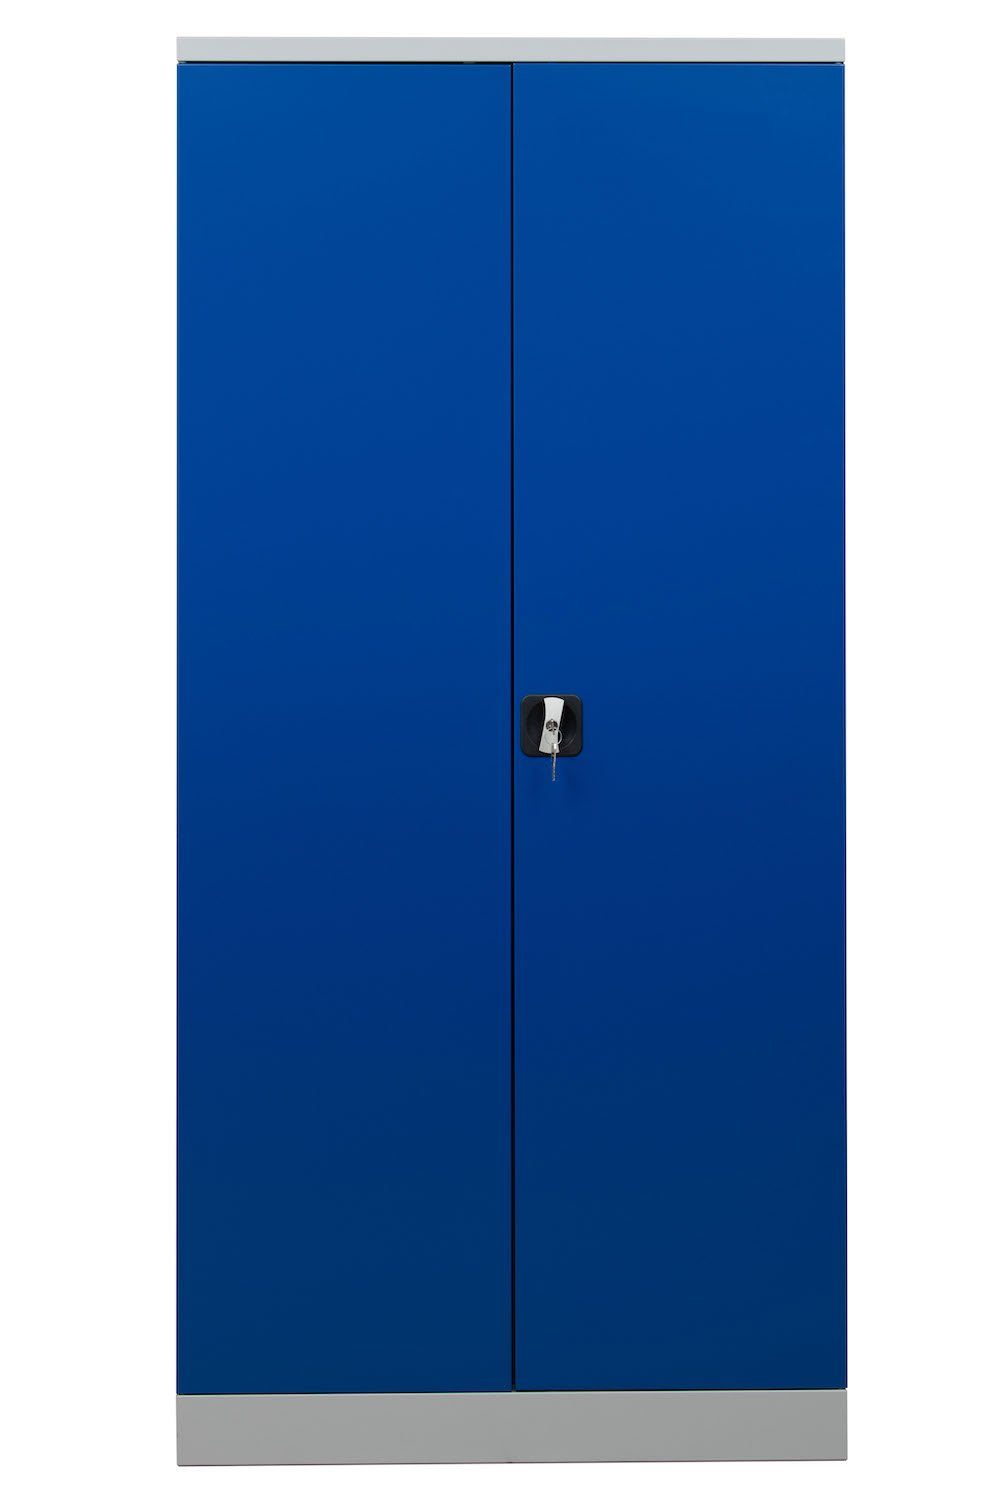 Moose, PROREGAL® HxBxT Grau-Blau, 195x92x42cm, Lackiert Flügeltürenschrank Mehrzweckschrank